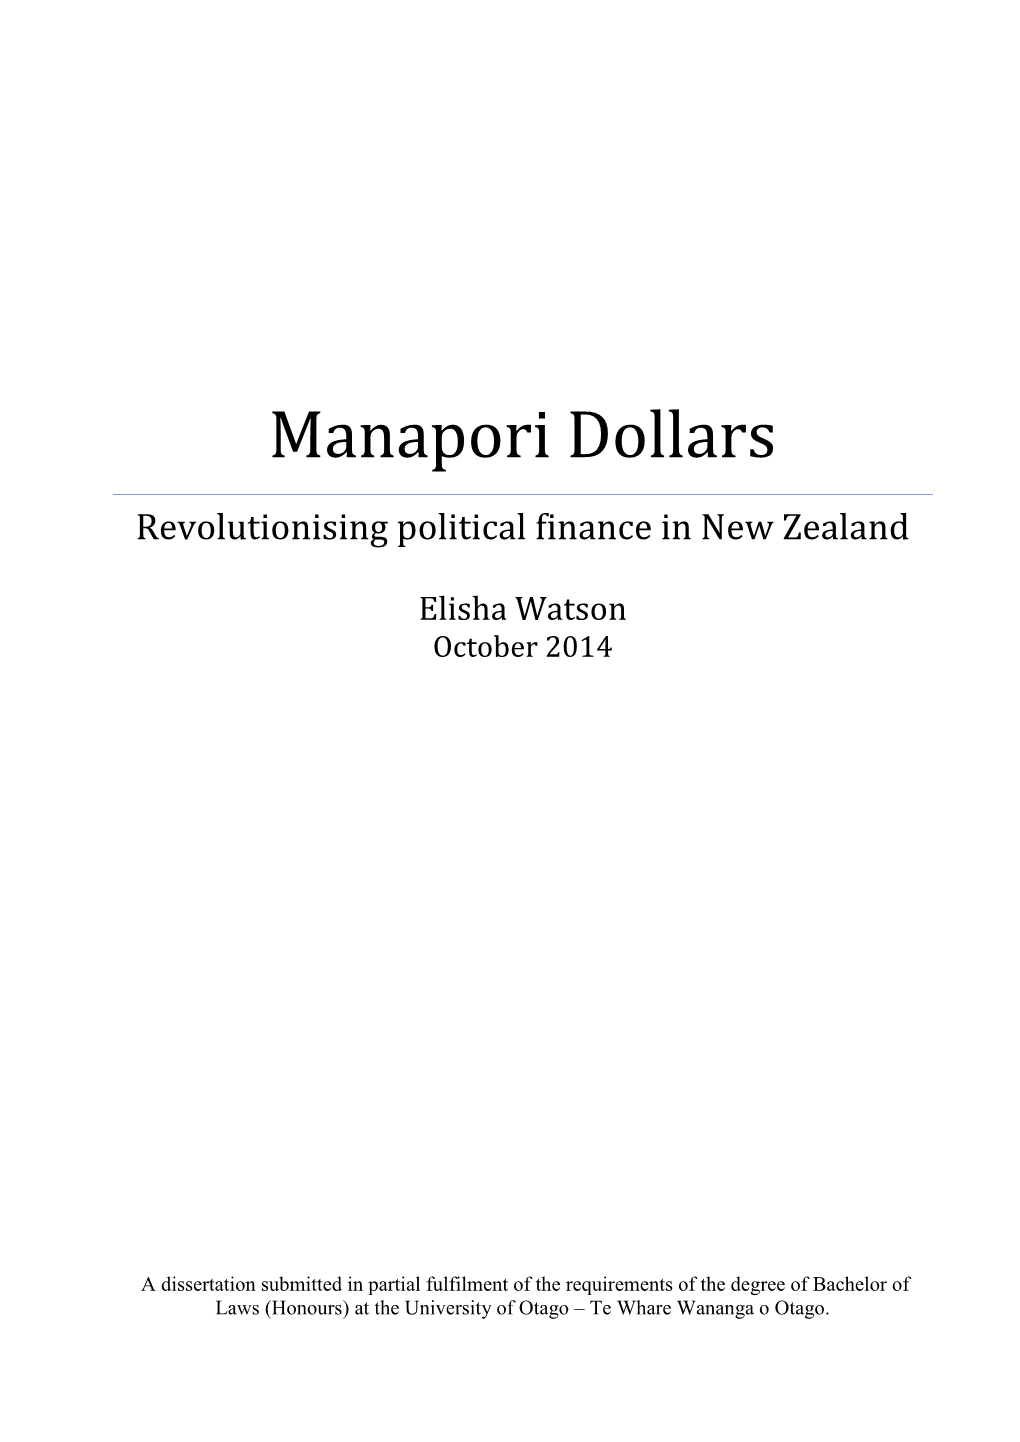 Manapori Dollars: Revolutionising Political Finance in New Zealand